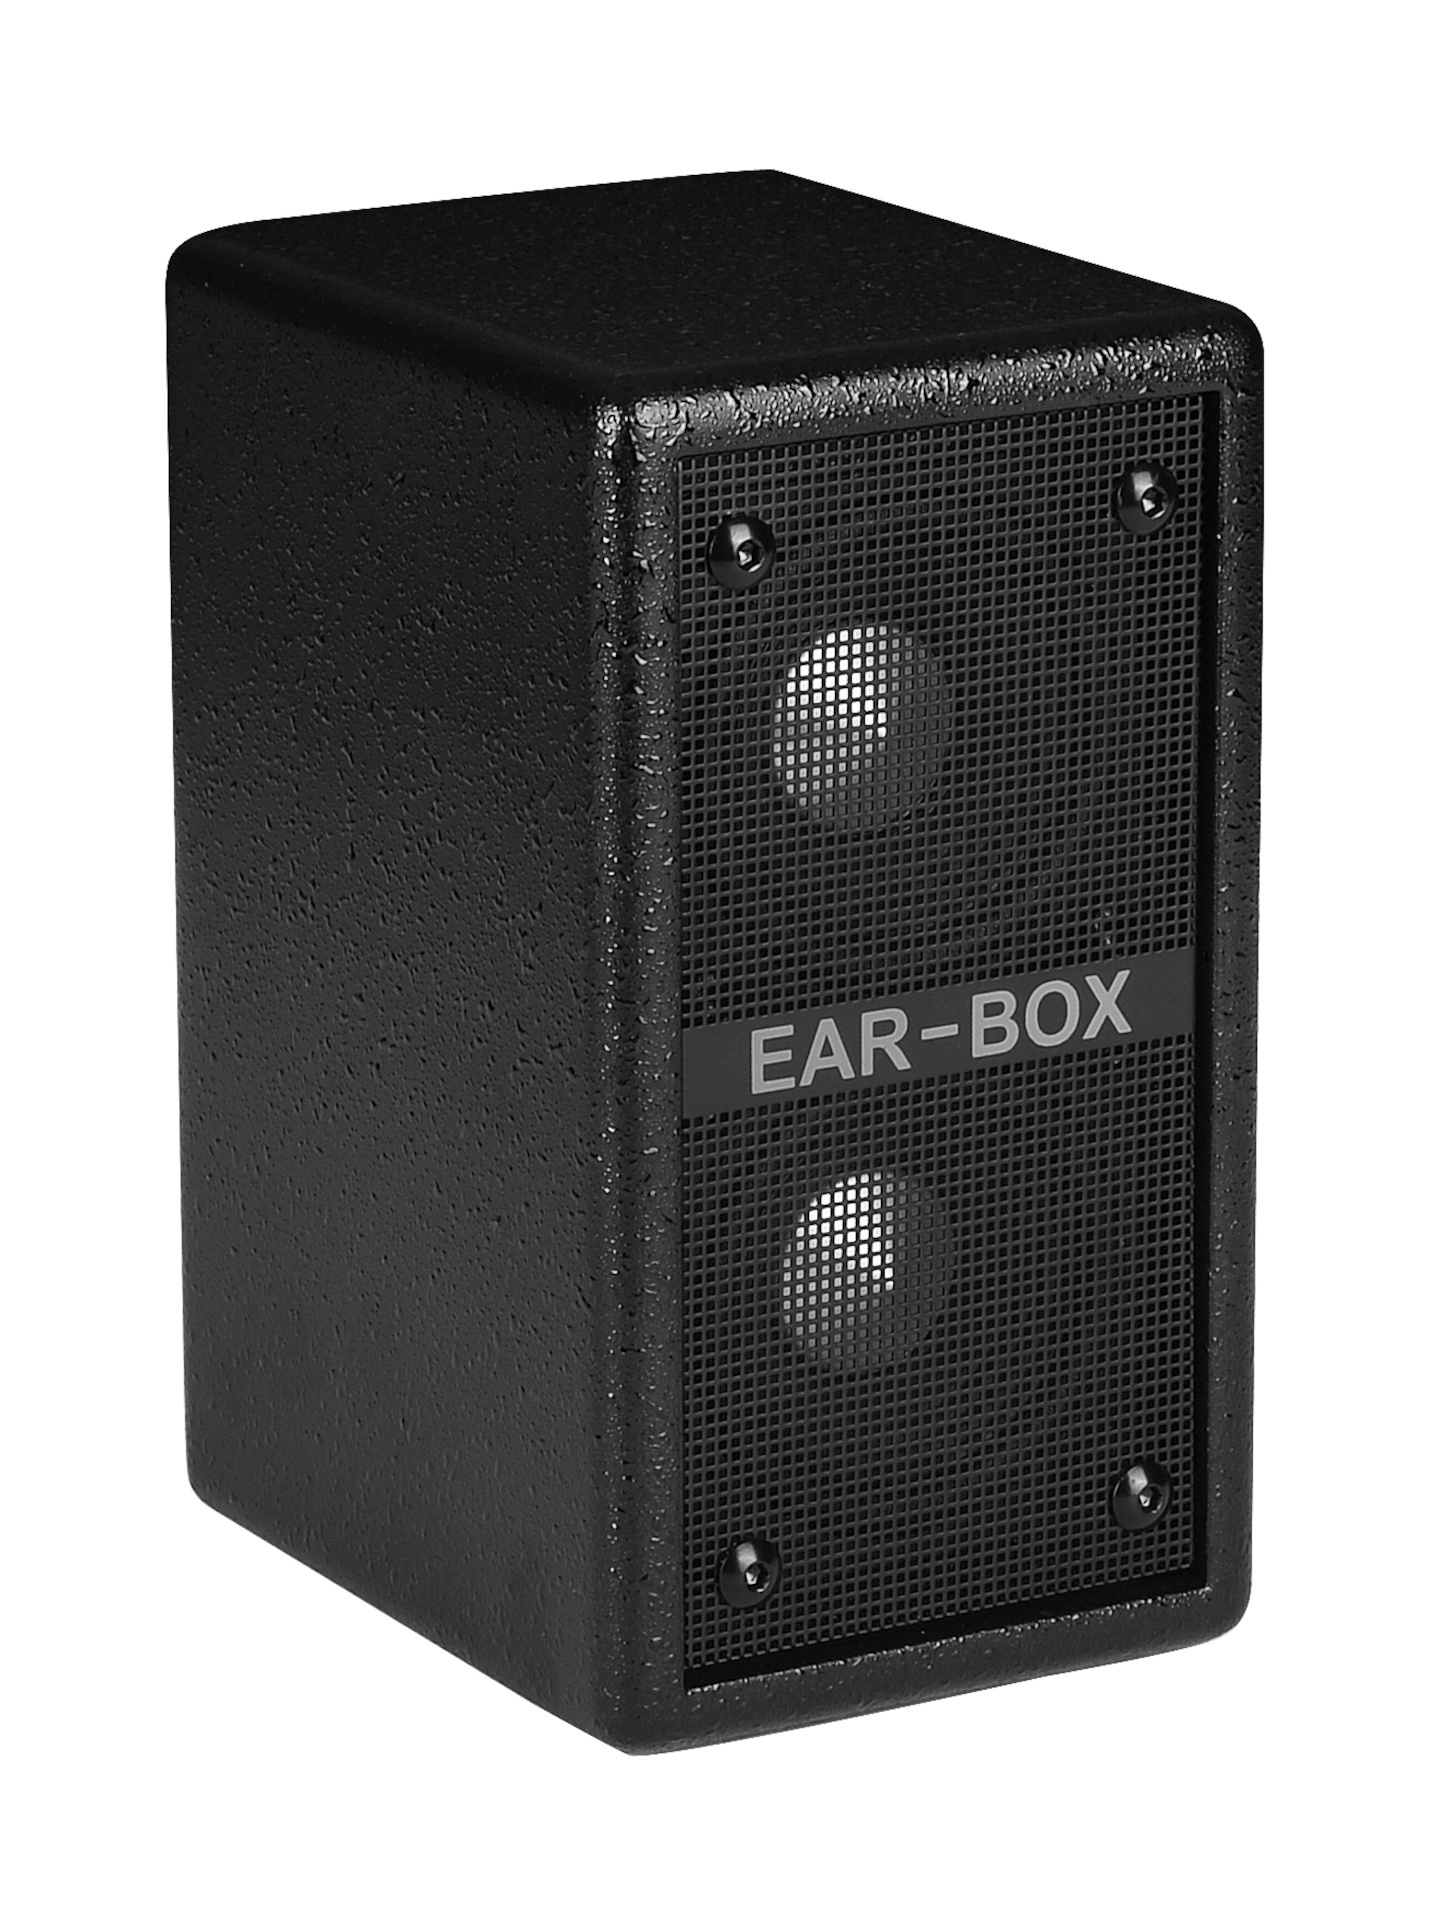 Phil Jones Bass Ear-Box EB-200 - 2x2" Stand Speaker Cabinet